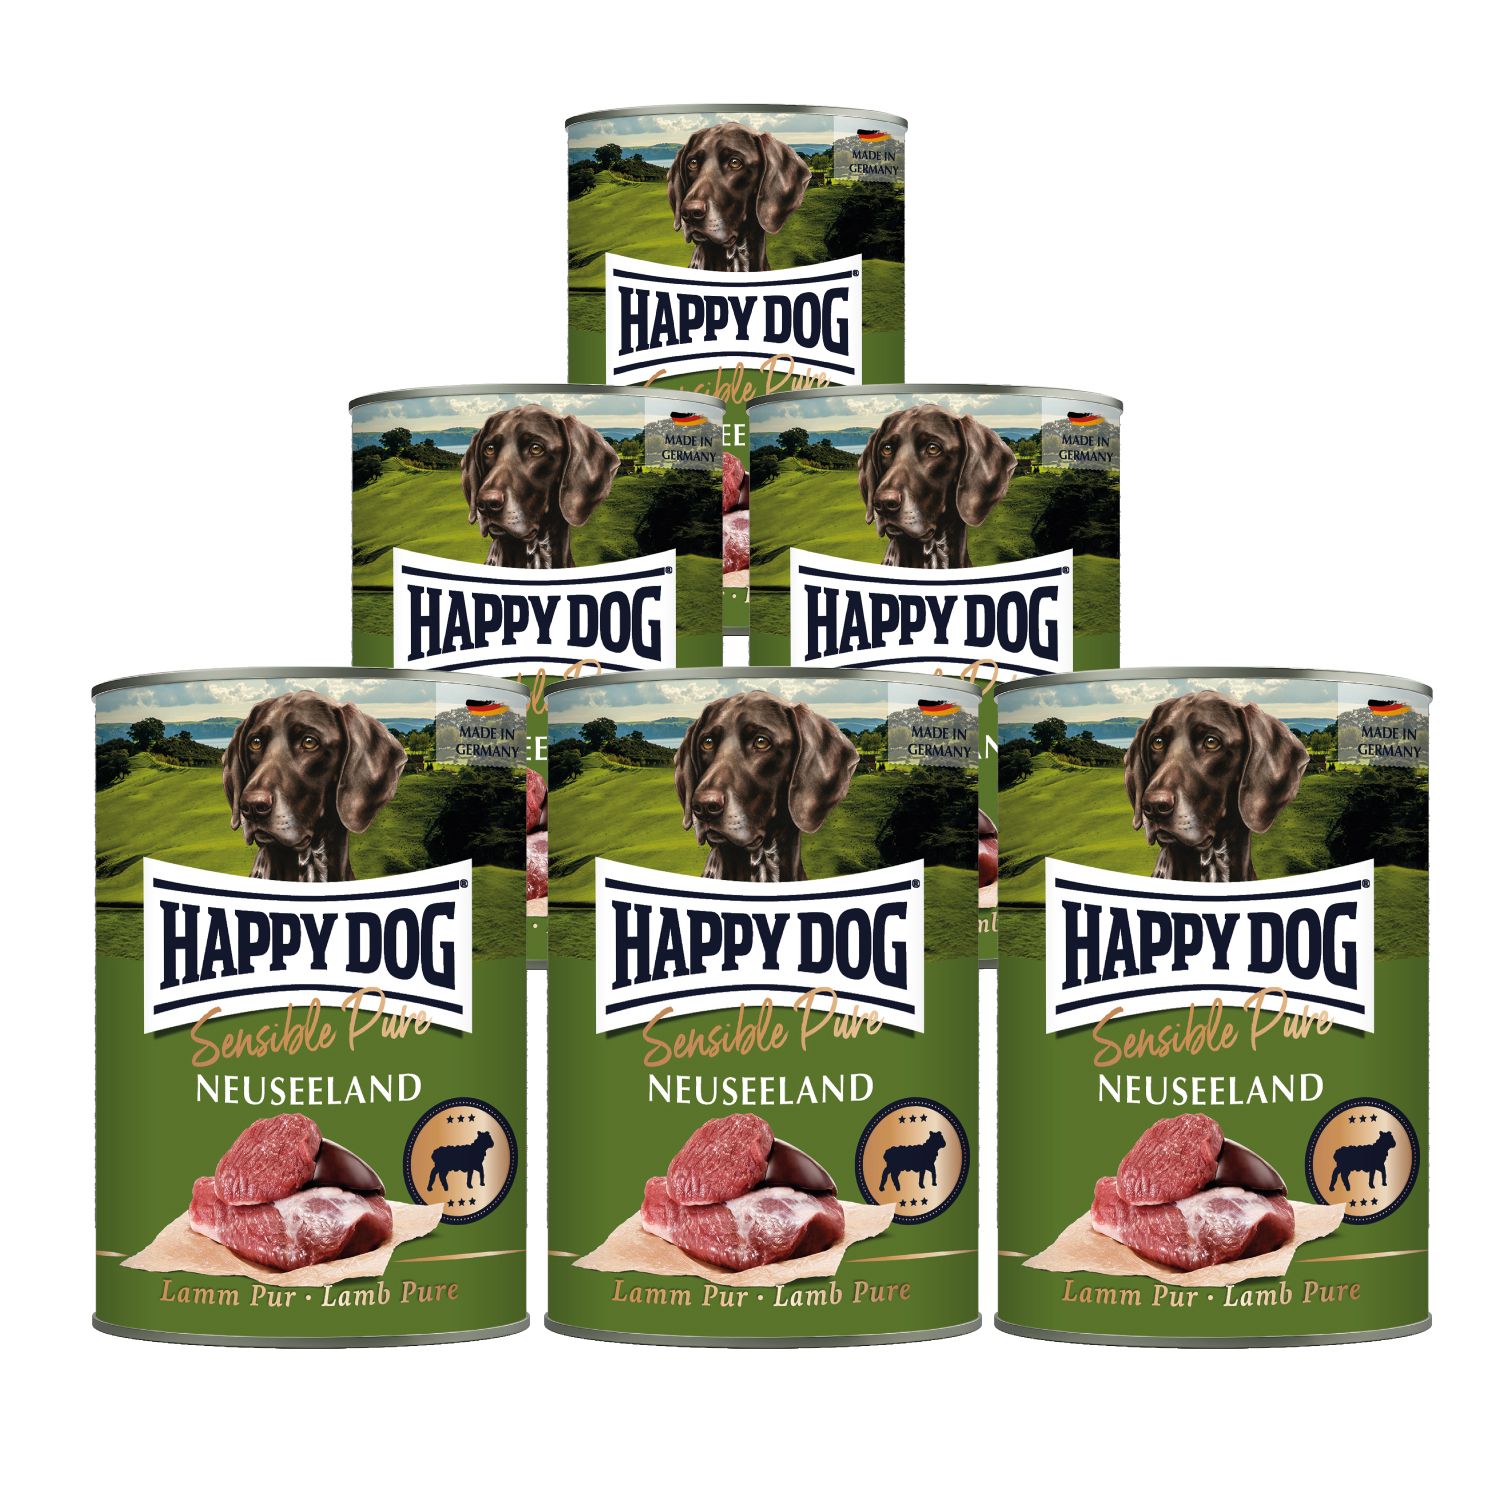 Happy Dog Sensible Pure Neuseeland 400g